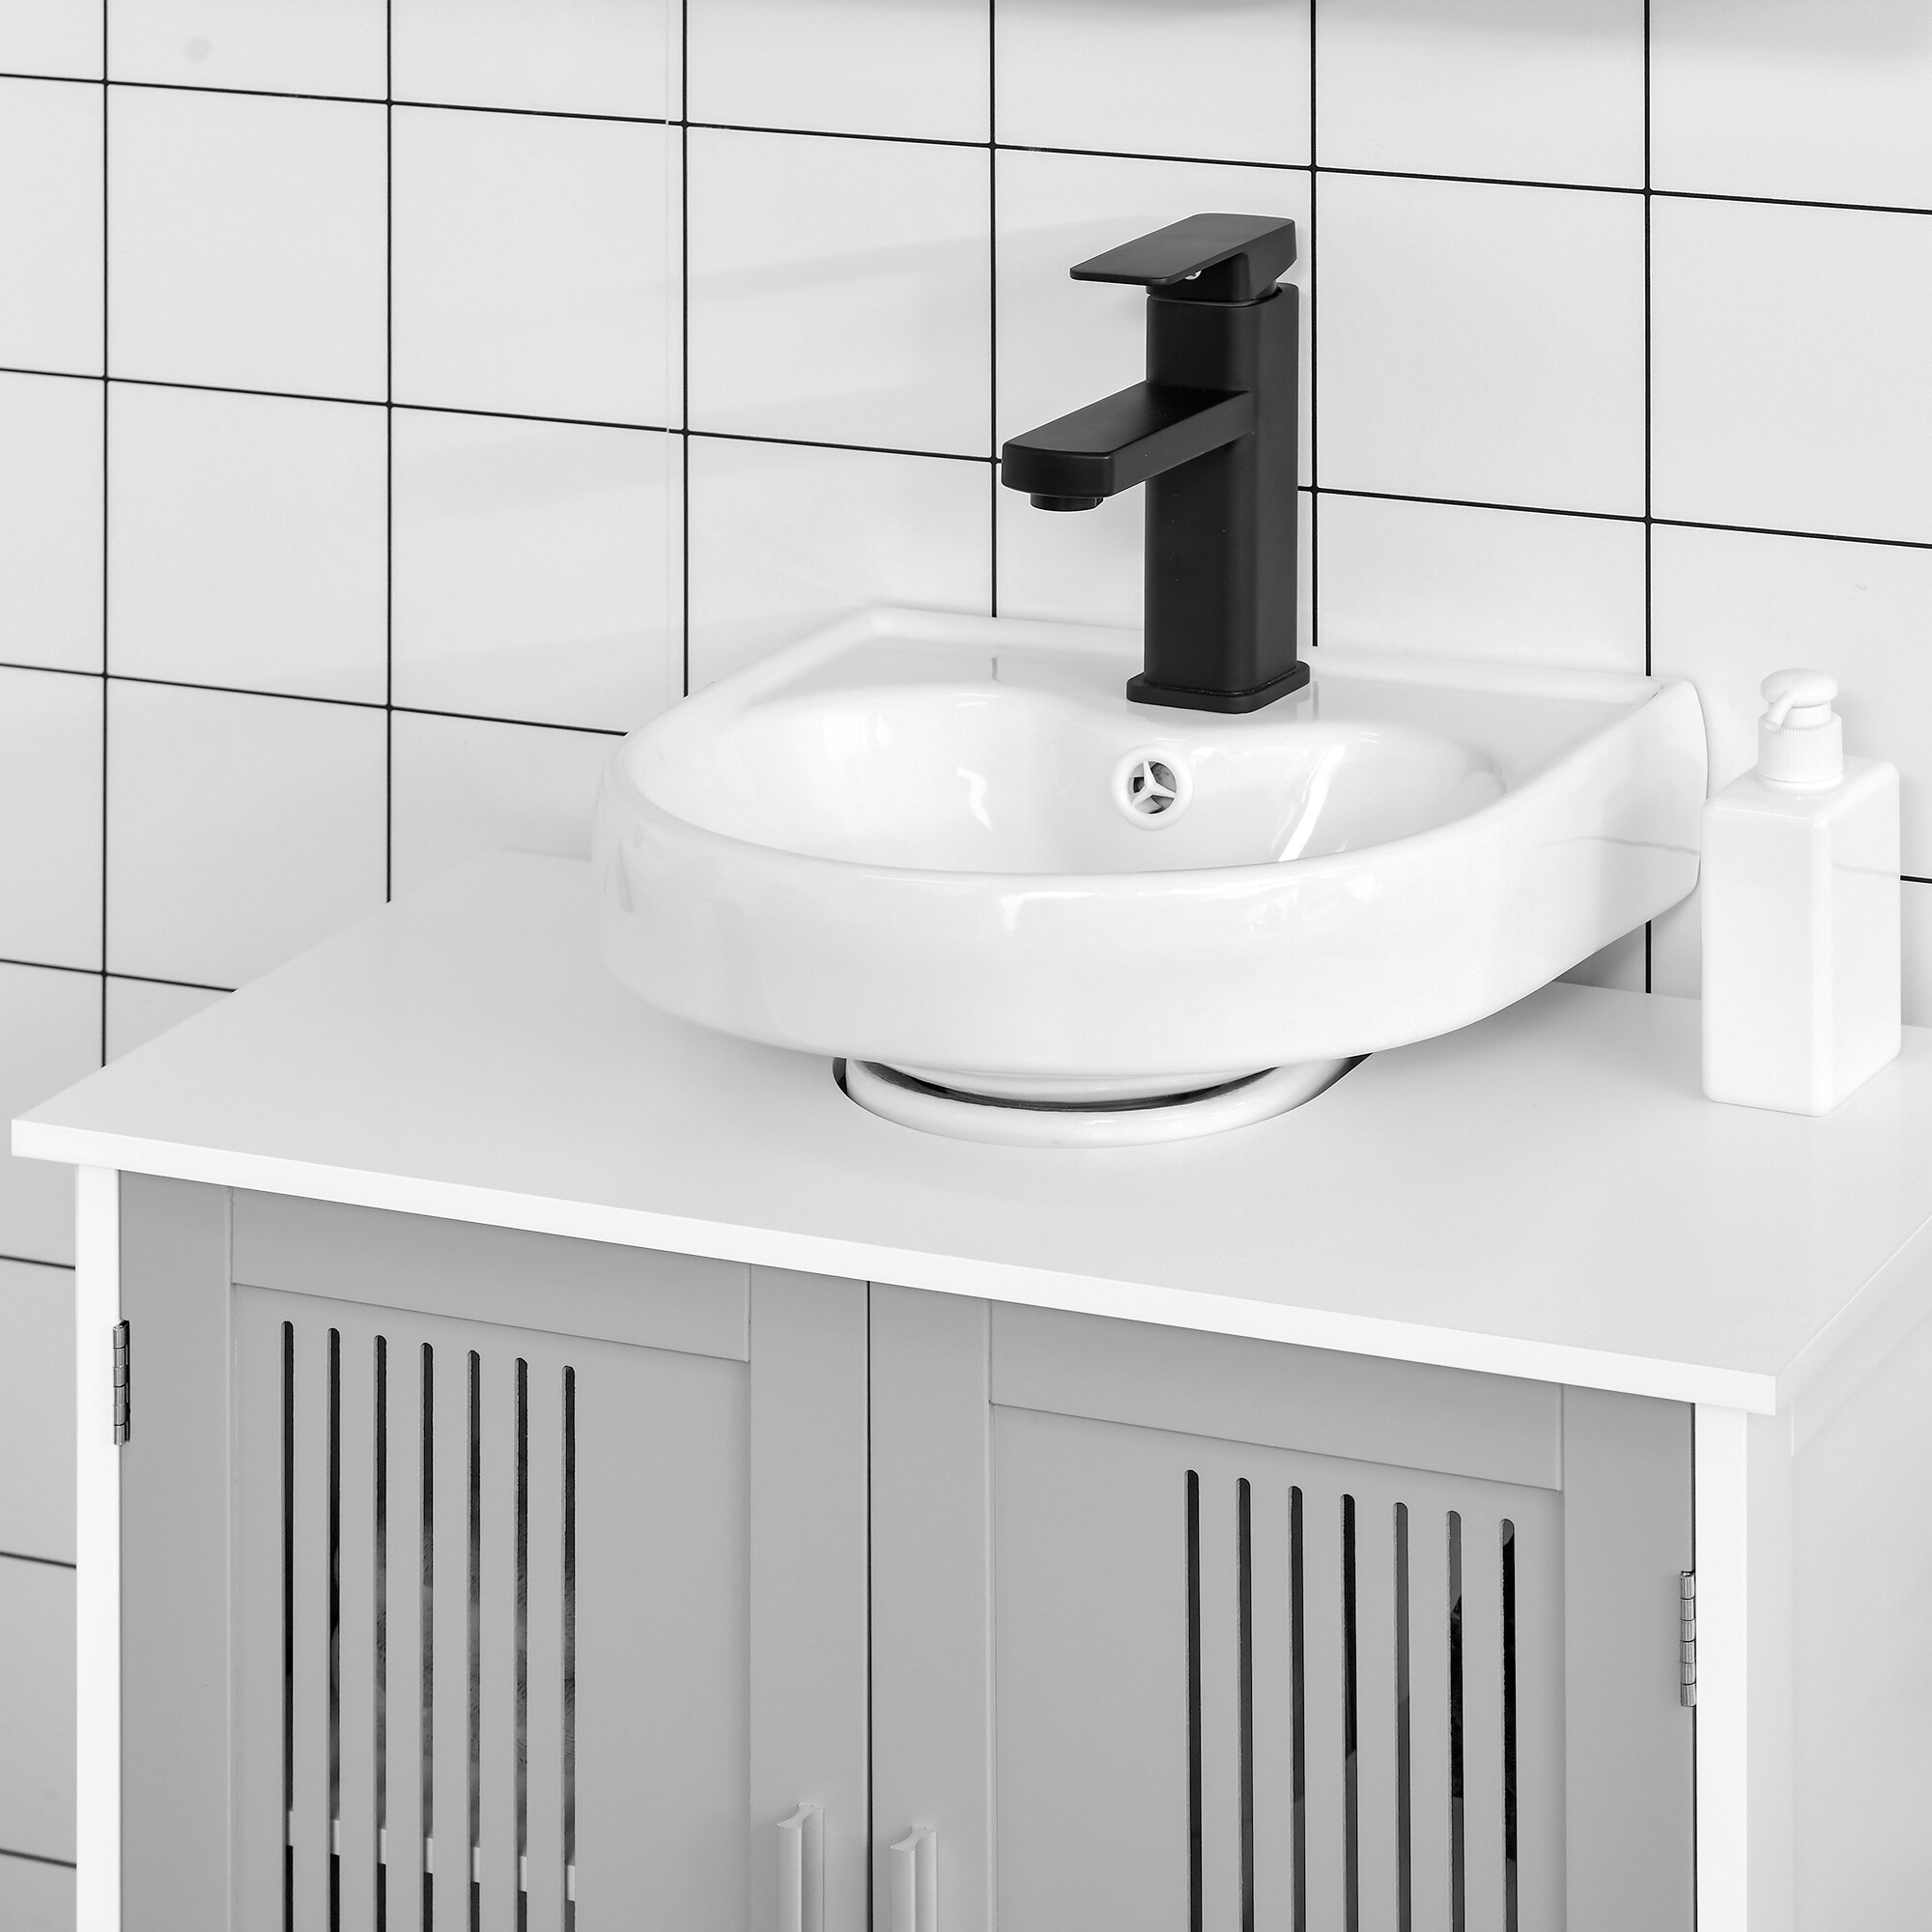 https://ak1.ostkcdn.com/images/products/is/images/direct/ff818ddfca6848e03061947bc9c0215f874a9ef2/kleankin-Modern-Under-Sink-Cabinet-with-2-Doors%2C-Bathroom-Vanity-Unit%2C-Pedestal-Under-Sink-Design.jpg